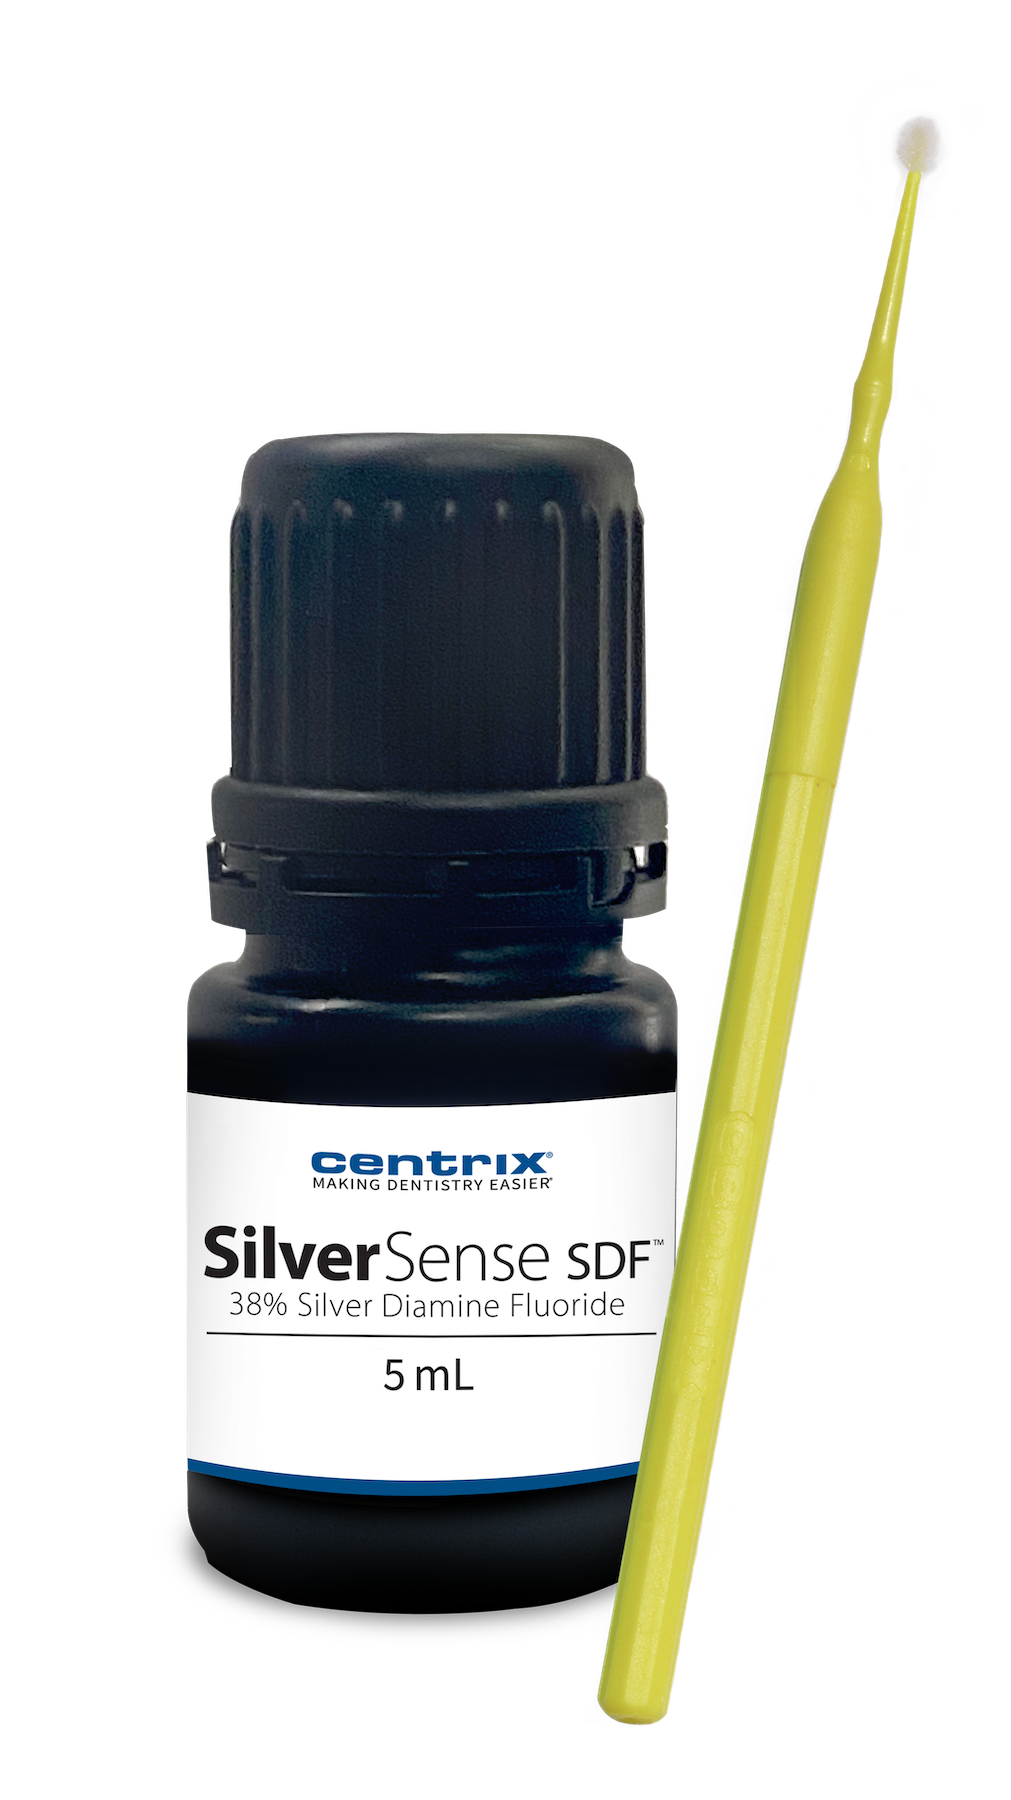 SilverSense SDF from Centrix | Image Credit: © Centrix